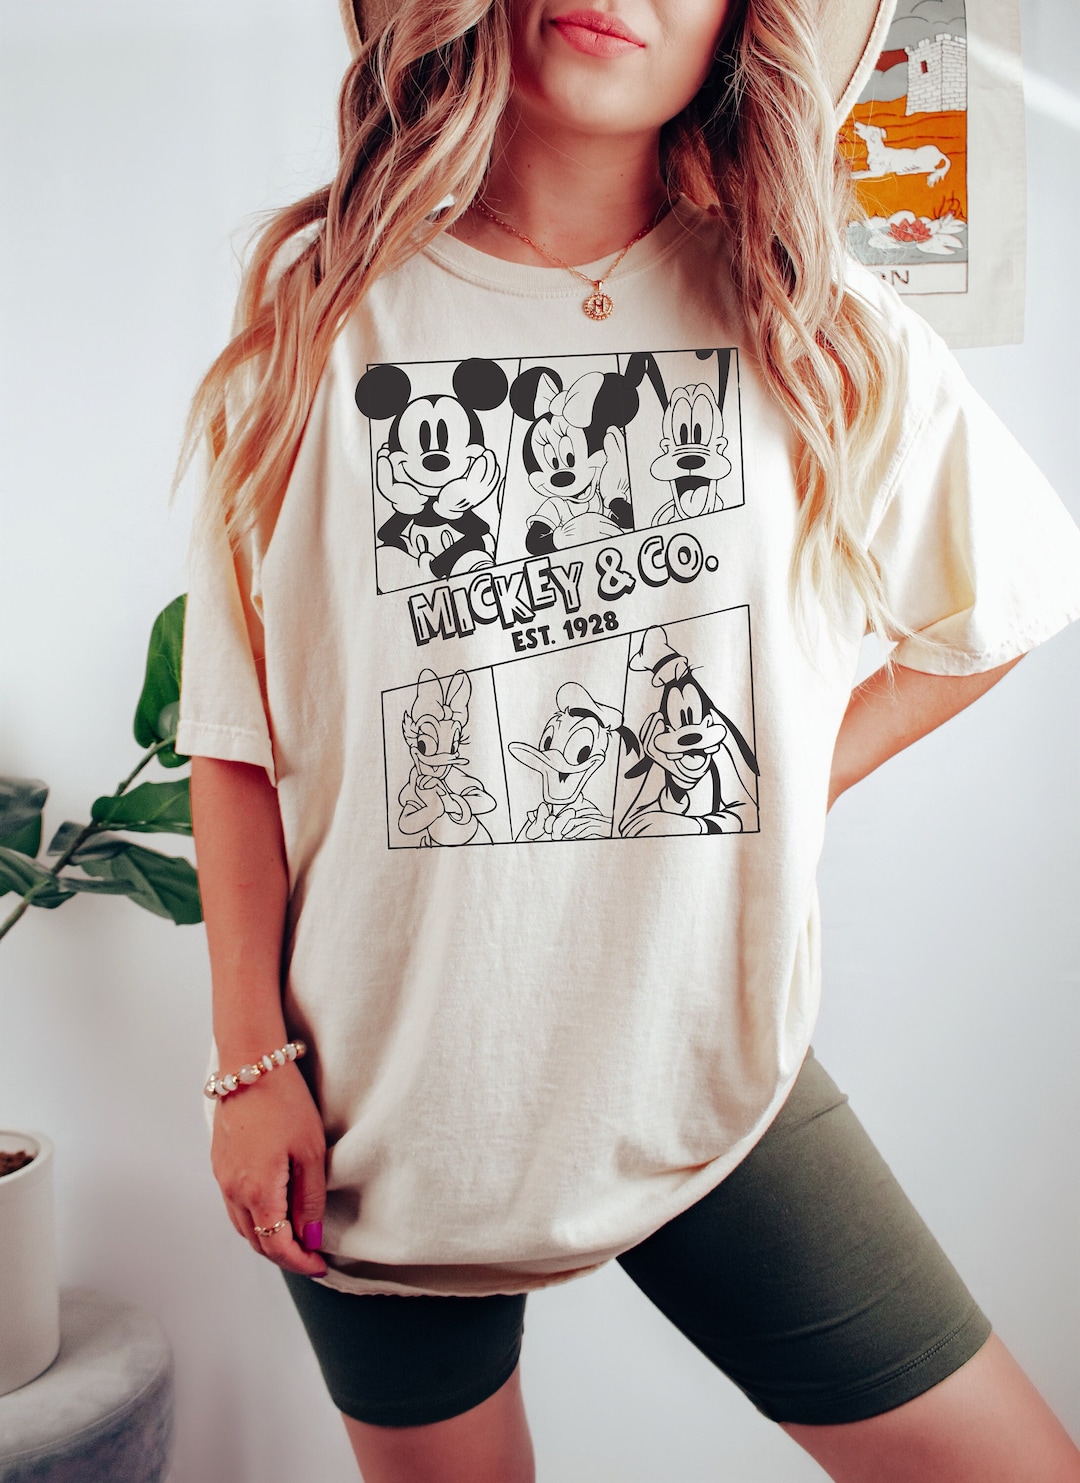 Mickey & Co 1928 Shirt, Disneyworld Shirt, Disney Family Matching Shirt ...